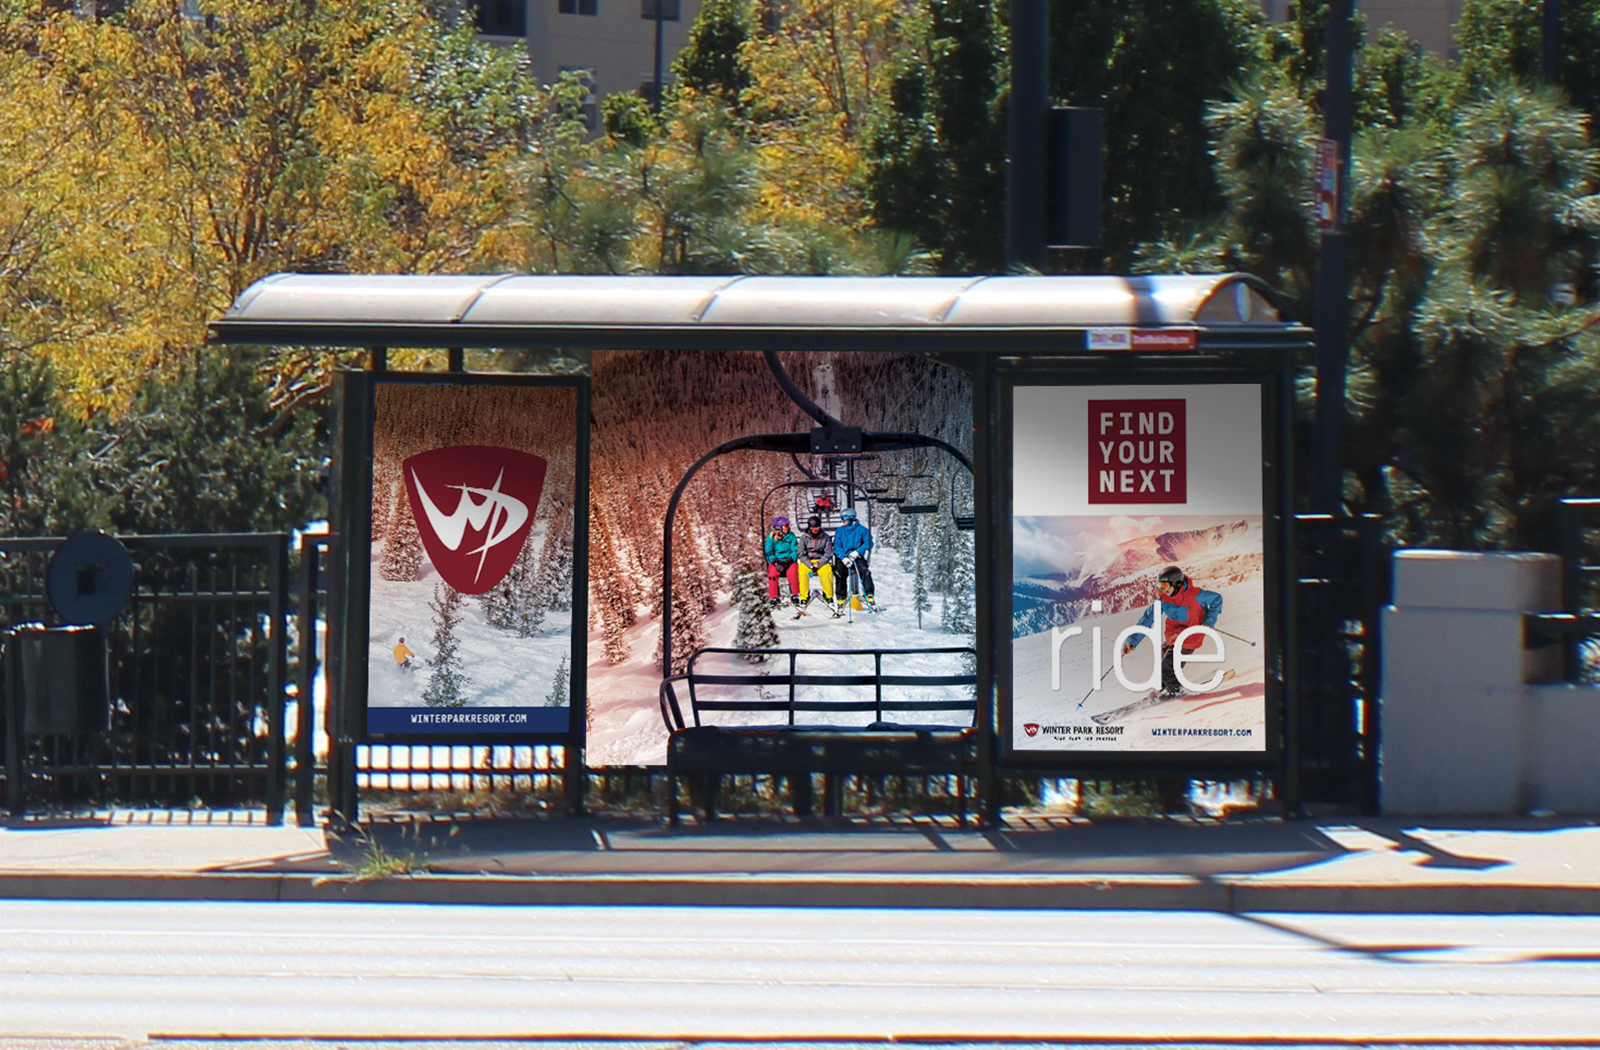 bus-stop-advertising-denver-colorado-street-media-3